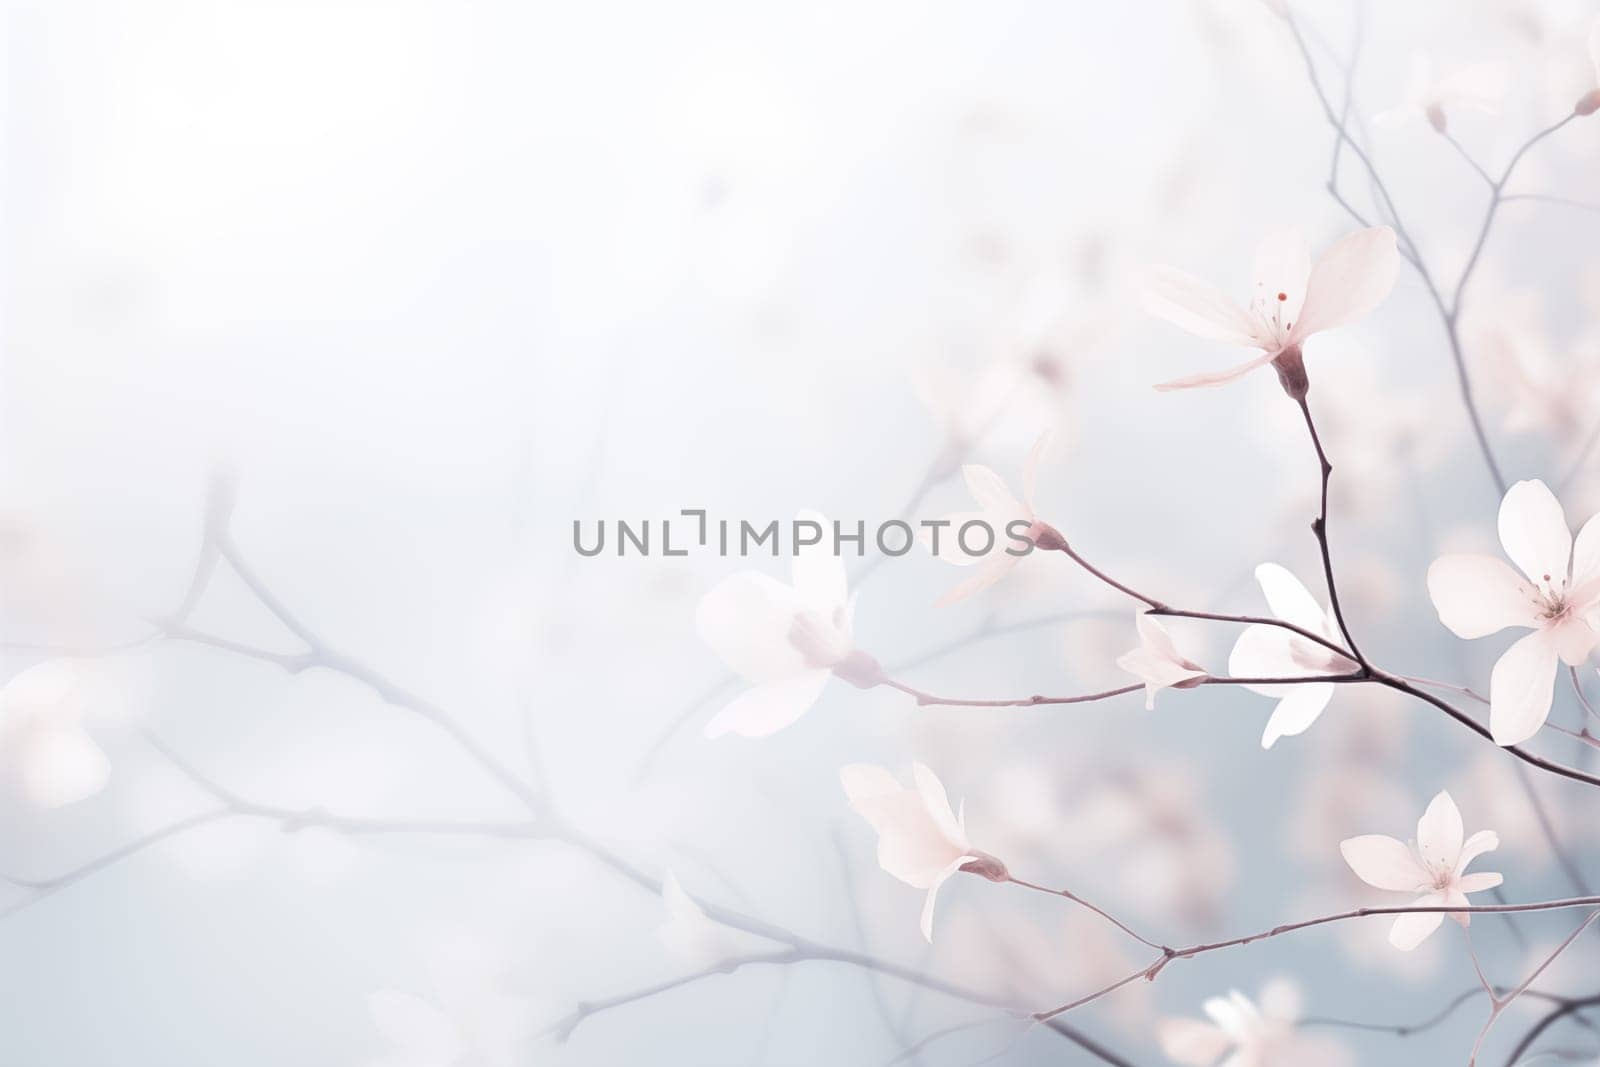 Soft bright white blurred background. High quality photo